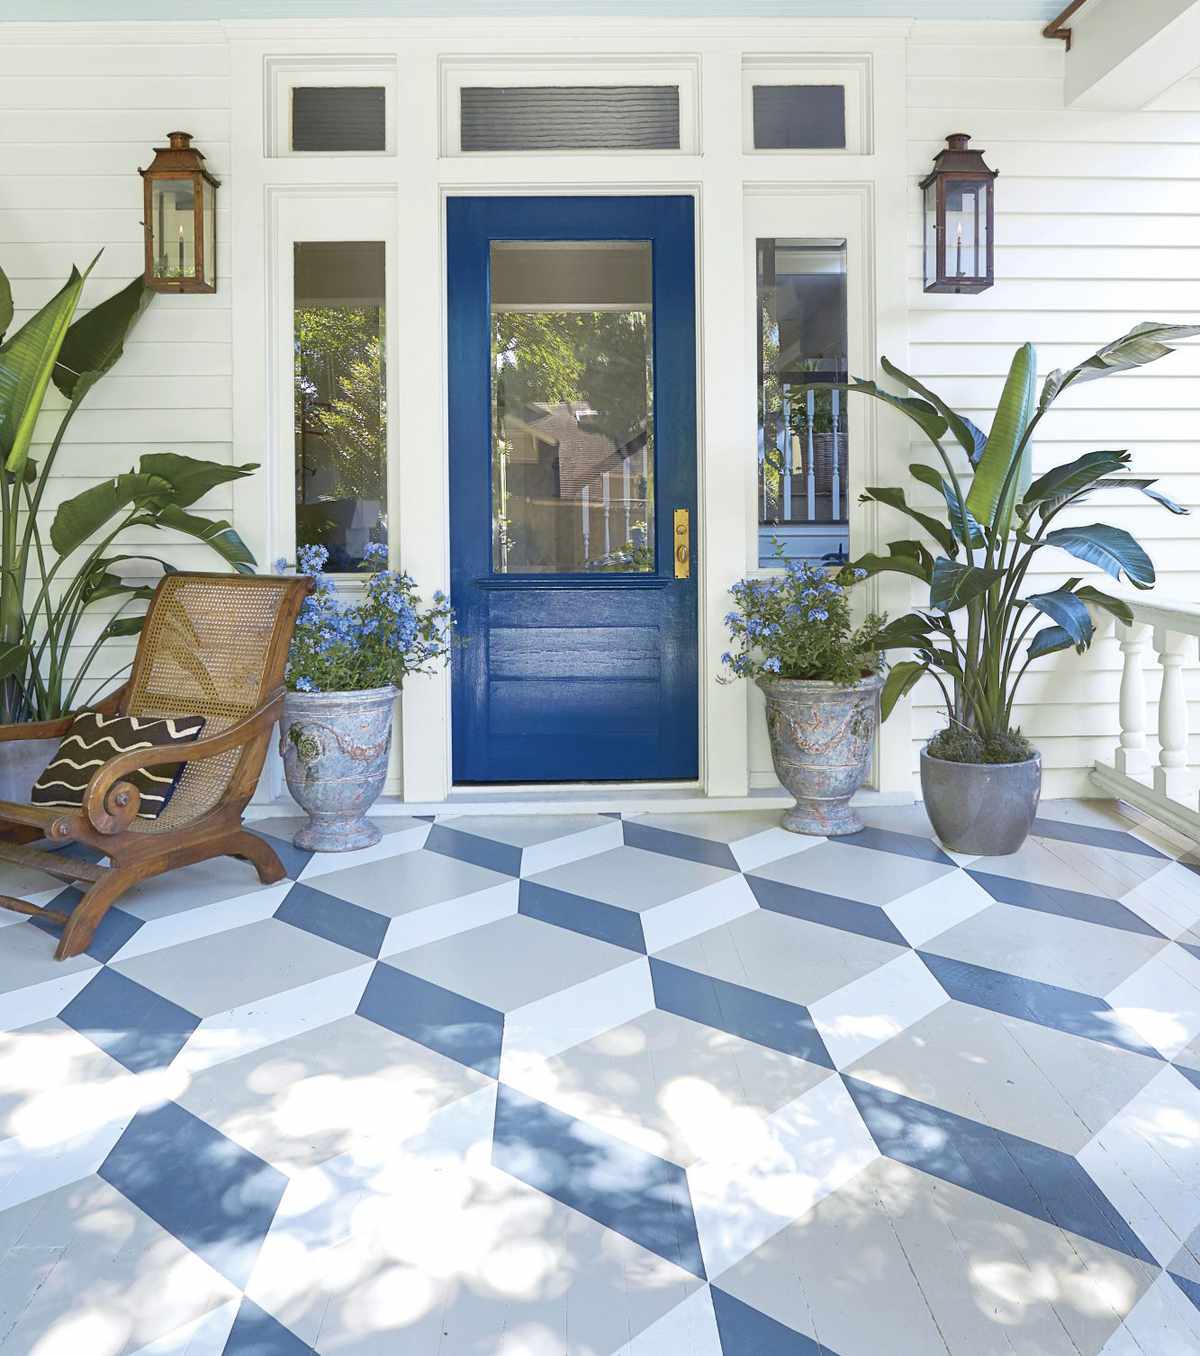 How To Paint Your Porch Floor, Front Porch Tile Flooring Ideas